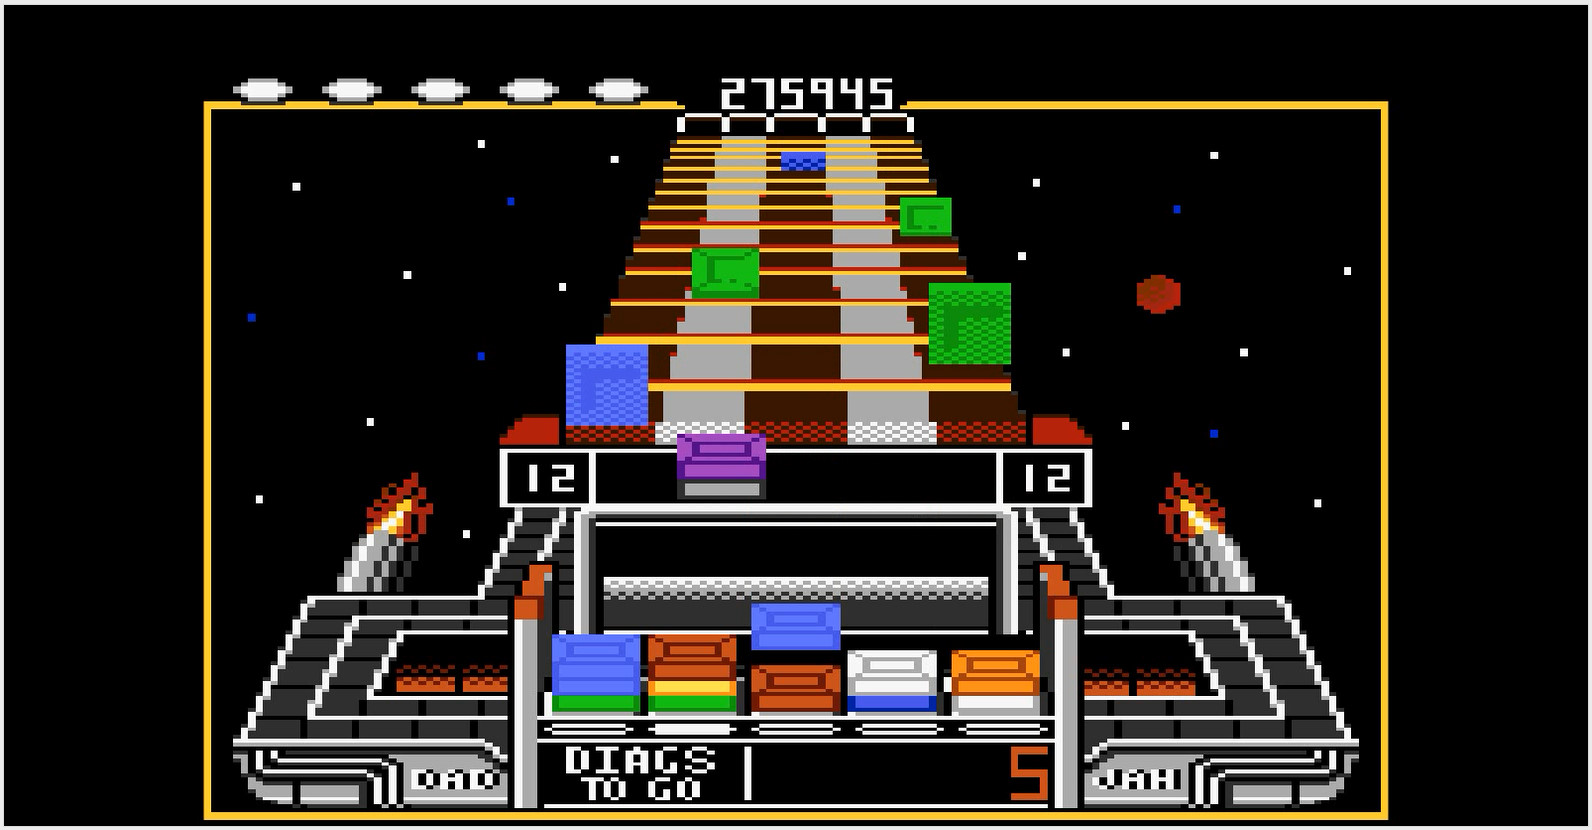 Scrabbler15: Klax: Normal [Level 11 Start] (Atari 7800 Emulated) 275,945 points on 2015-01-18 10:24:22